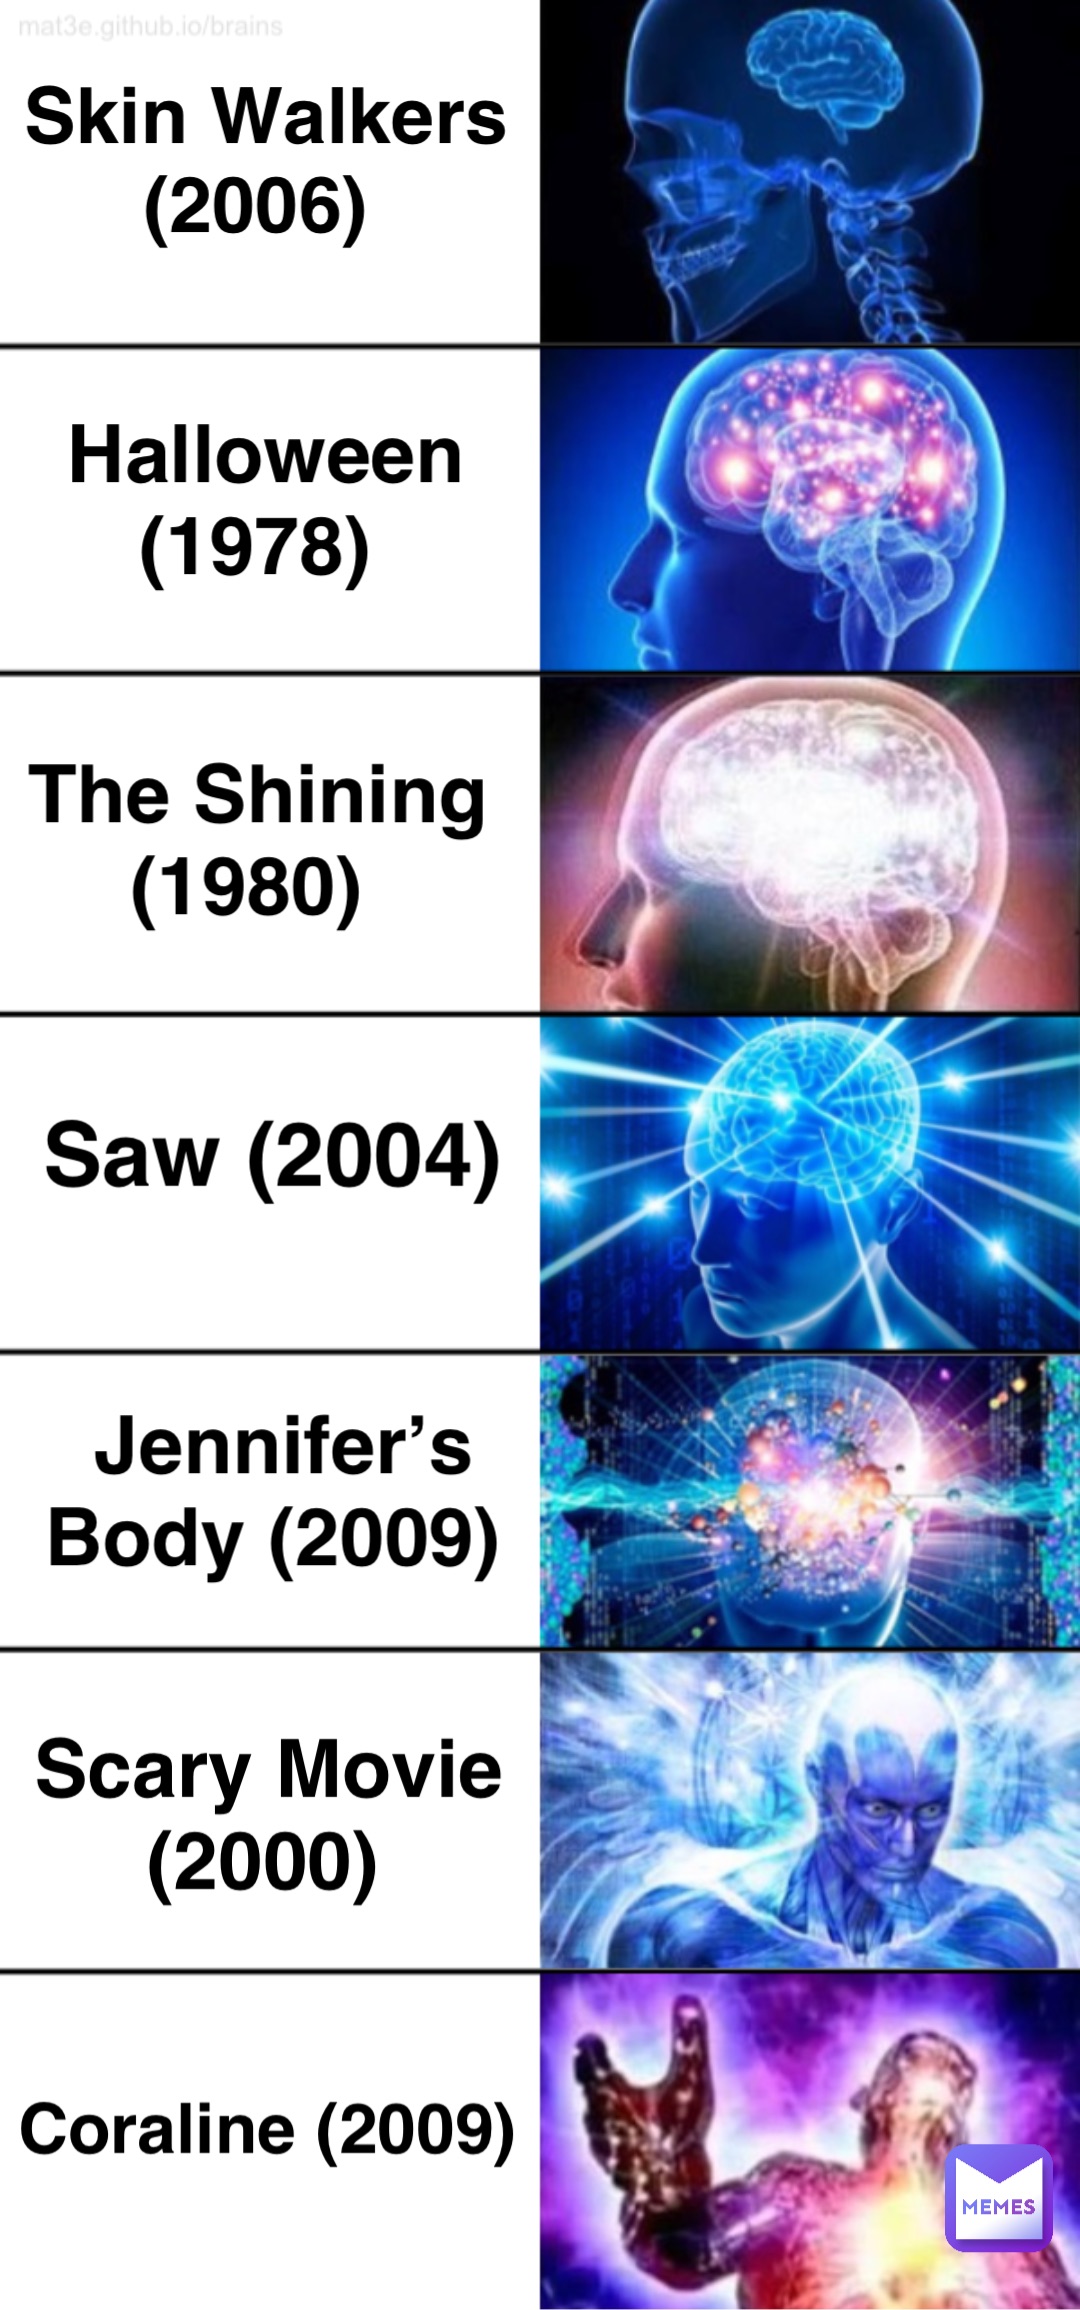 Skin Walkers (2006) Halloween (1978) The Shining (1980) Saw (2004) Jennifer’s Body (2009) Scary Movie (2000) Coraline (2009)